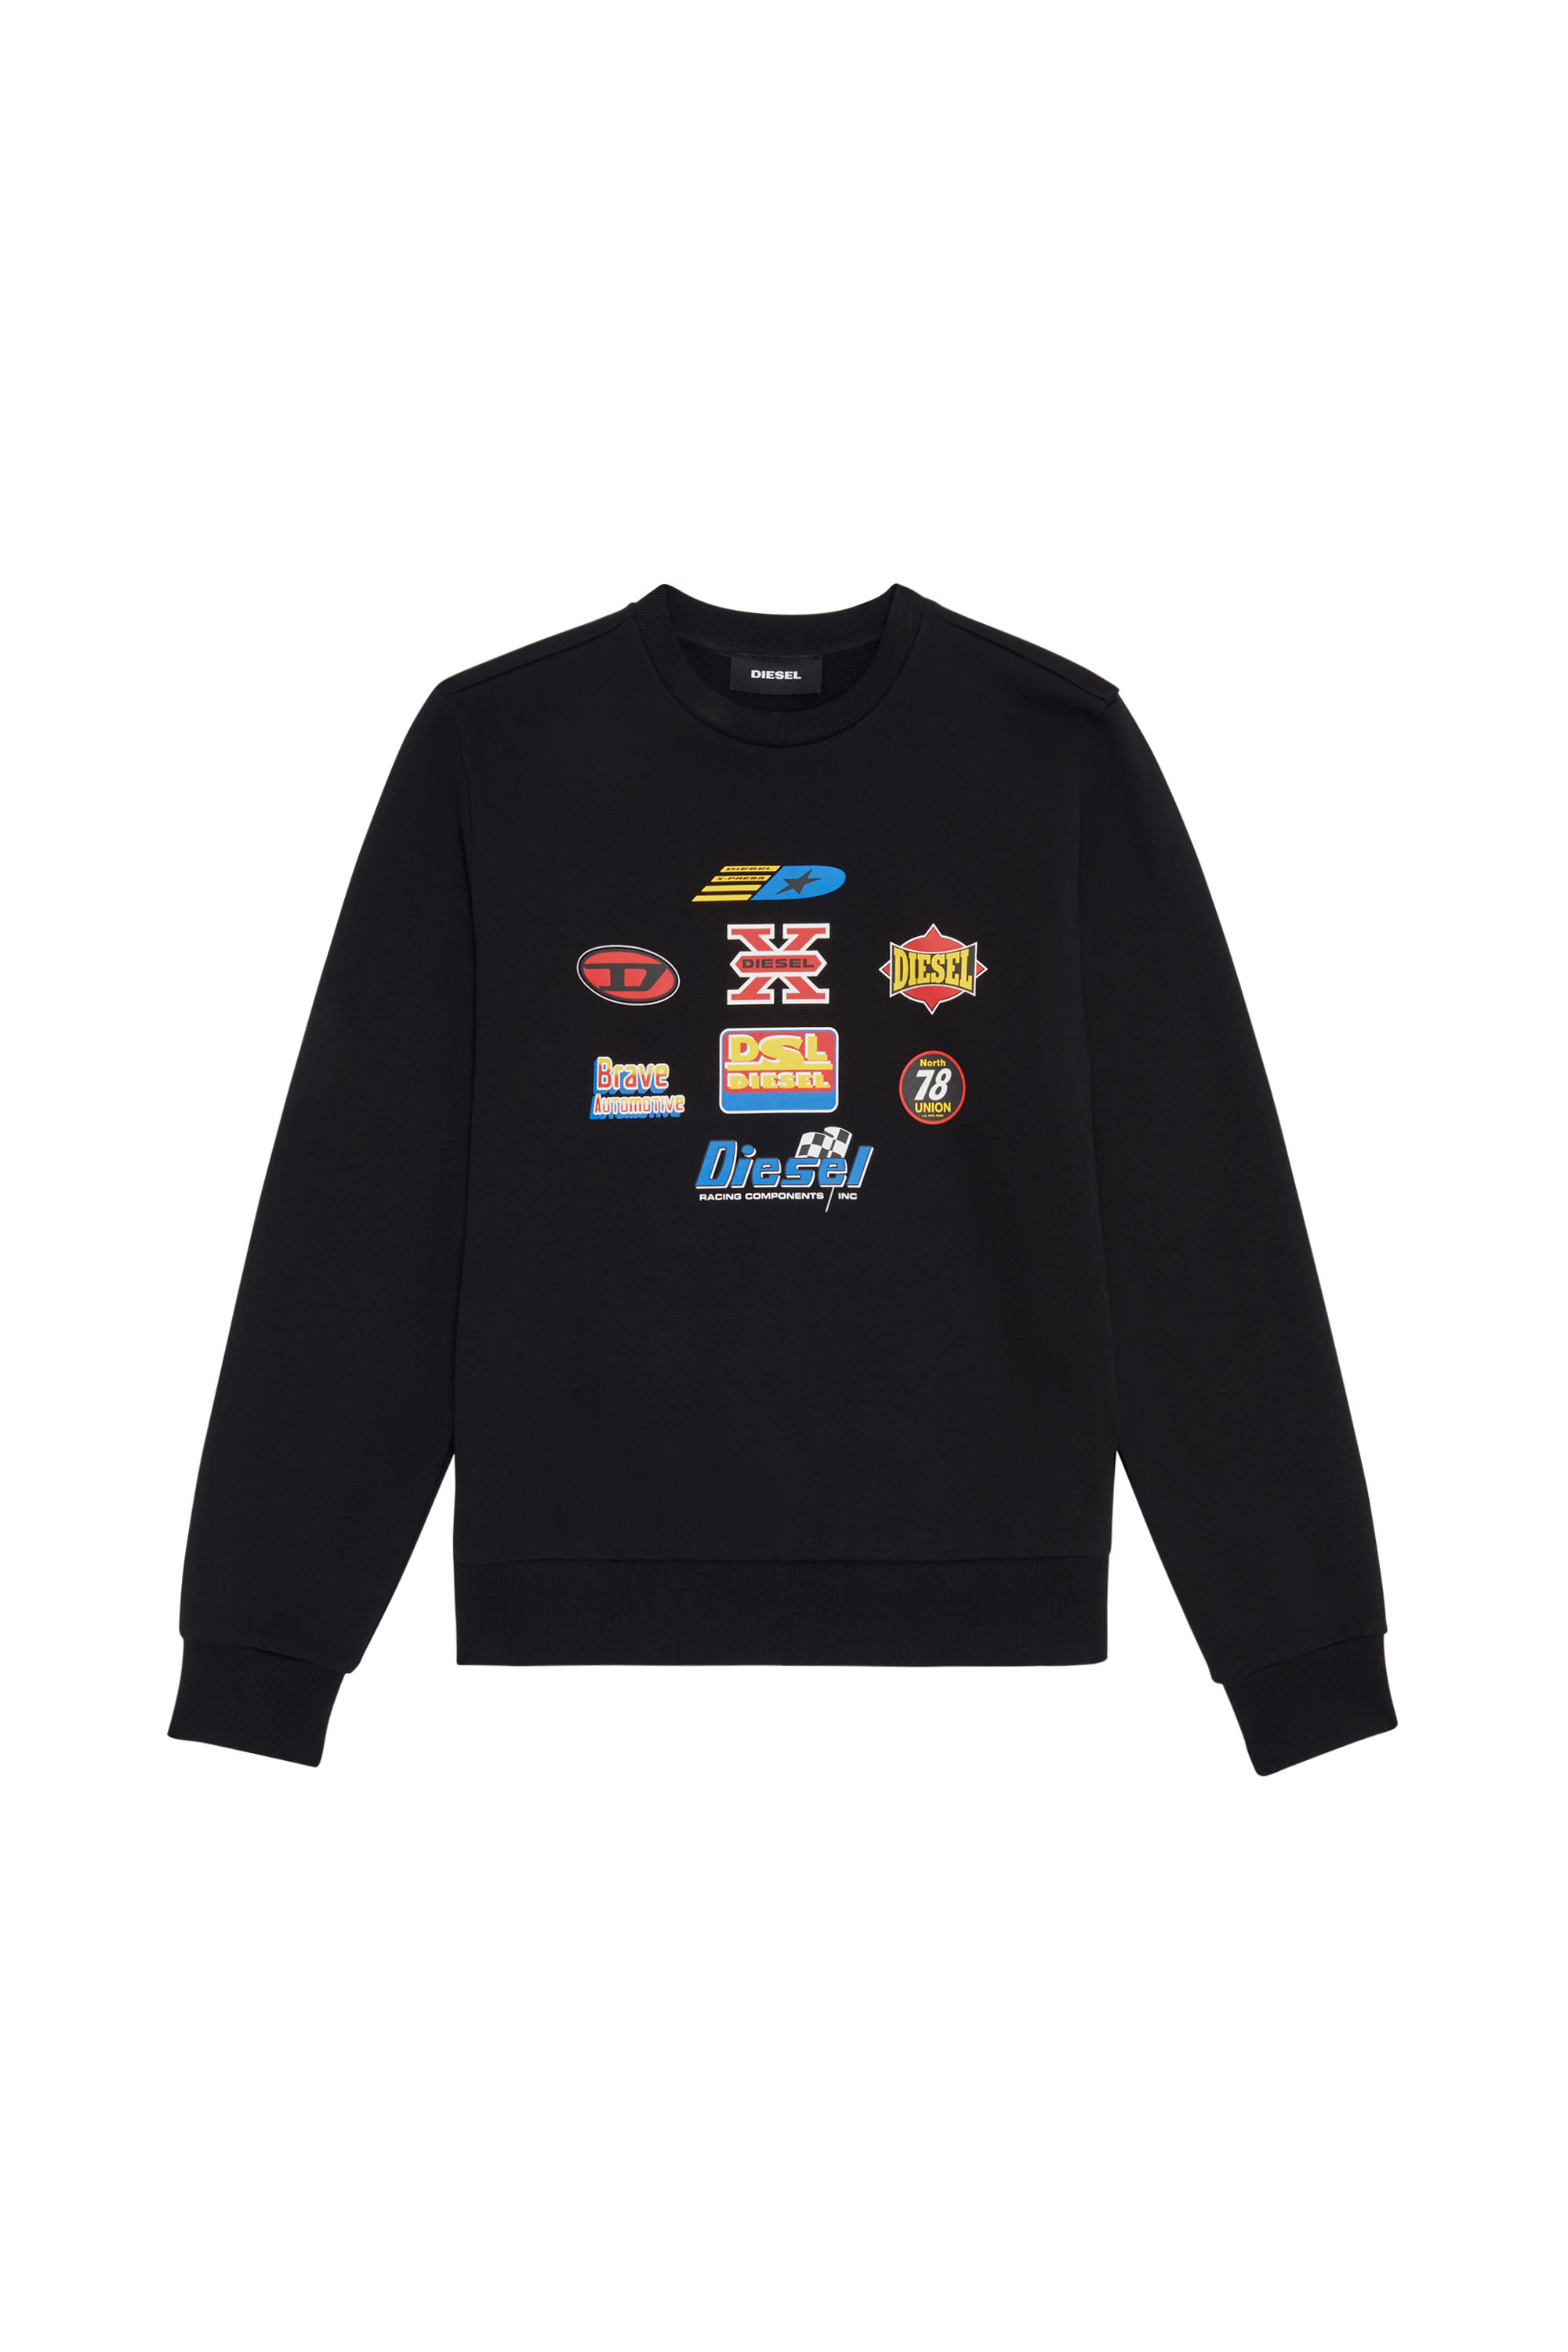 S-GINN-K24, Black - Sweaters